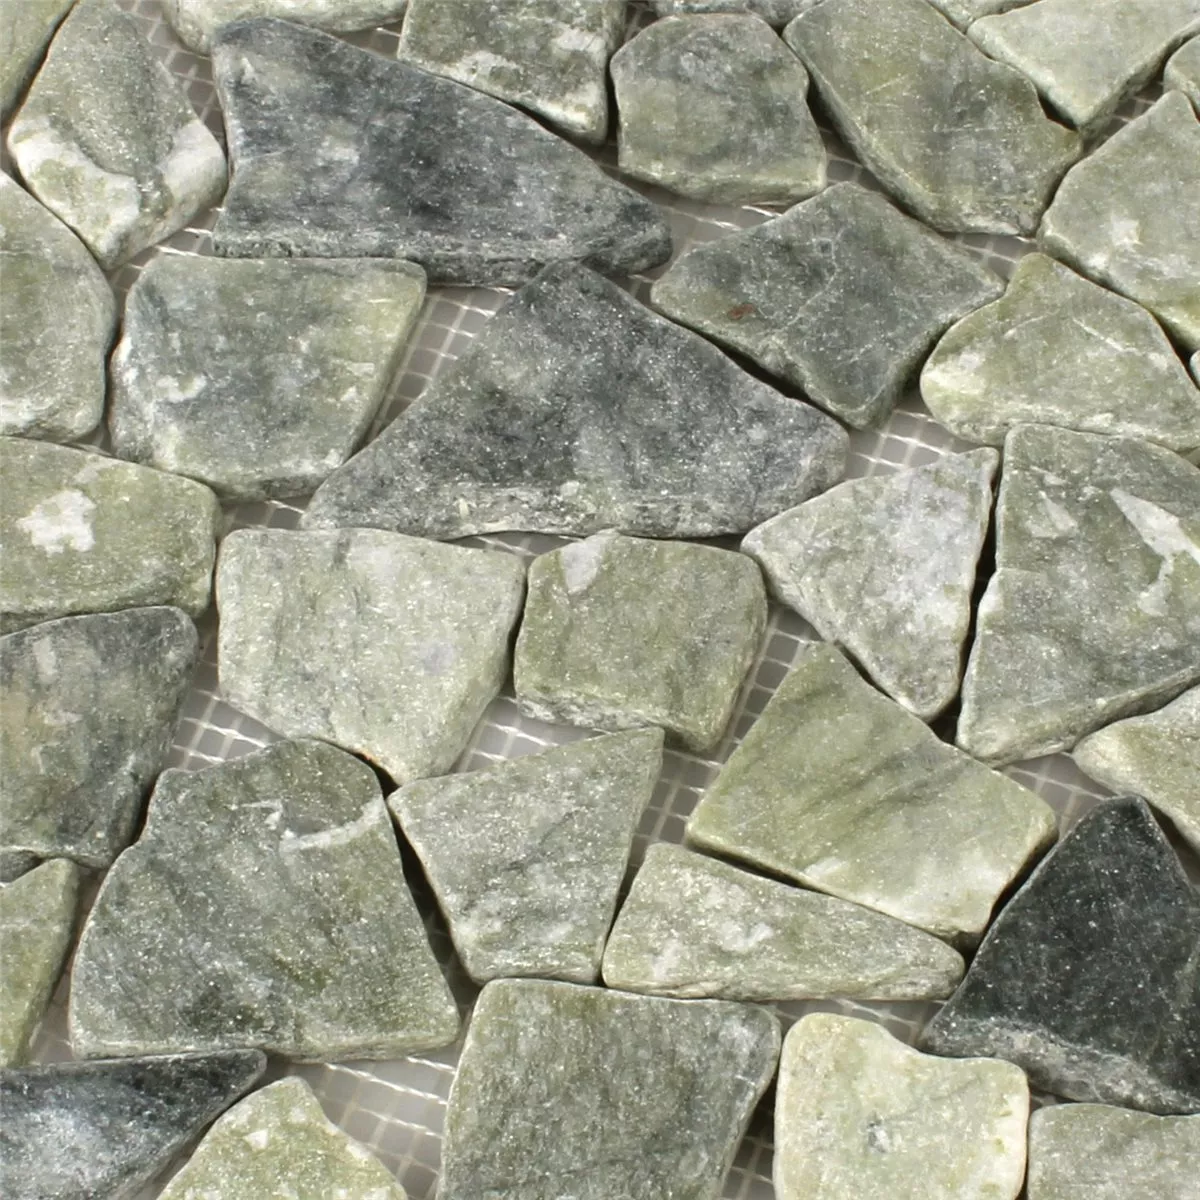 Sample Mosaic Tiles Broken Marble Grey Green